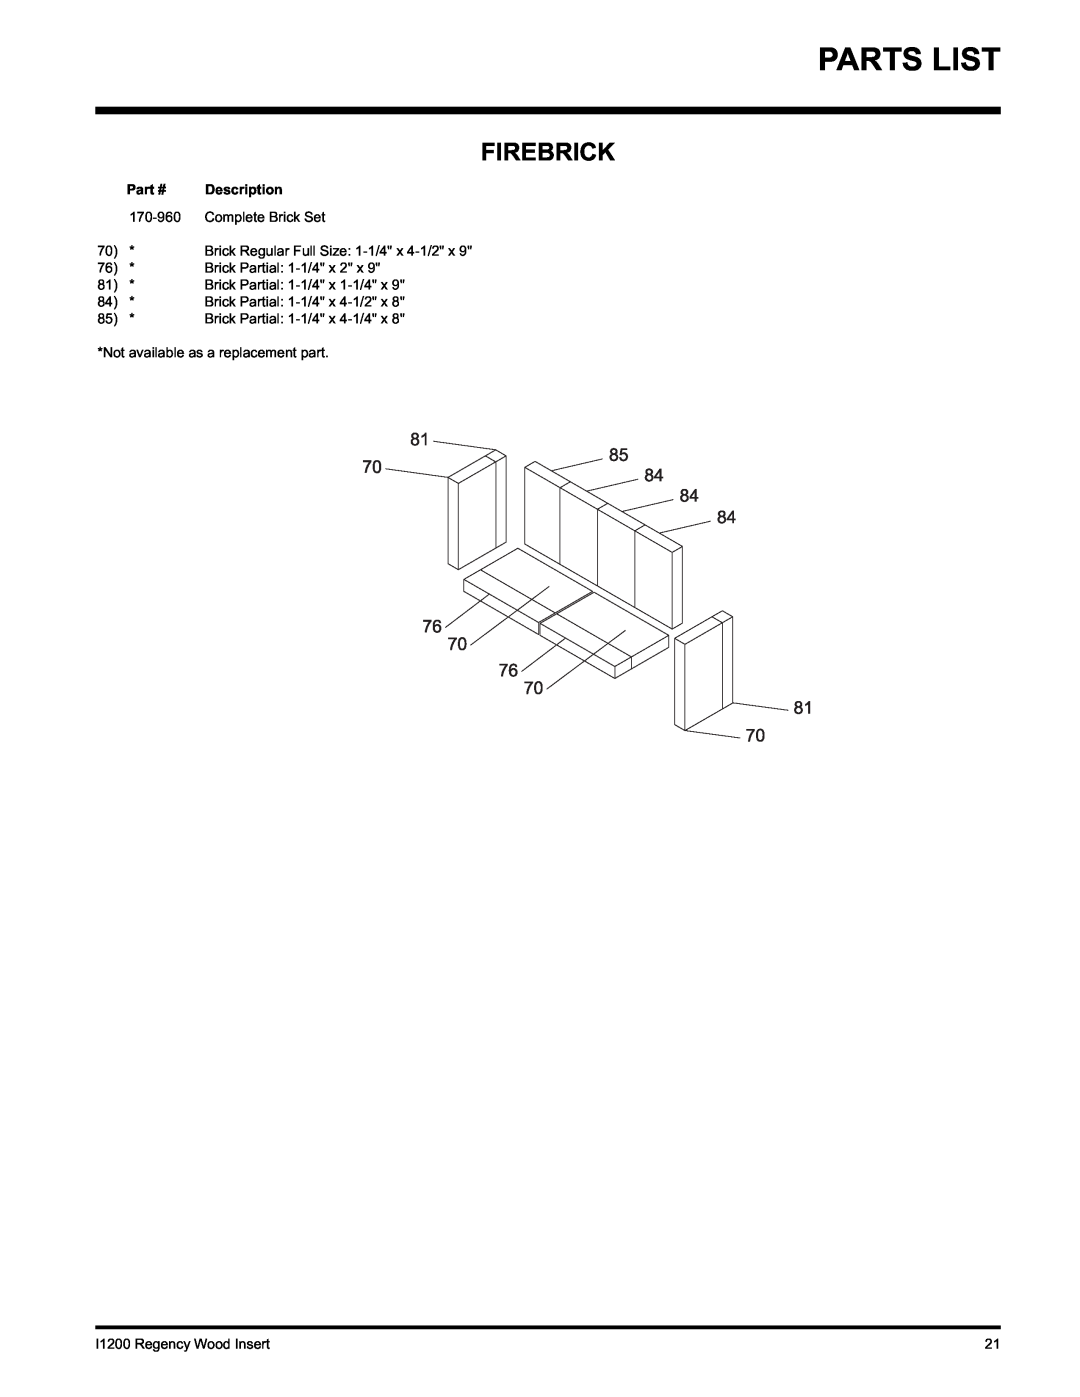 Regency I1200S installation manual Parts List, Firebrick, Description, 170-960, Complete Brick Set, Brick Partial 1-1/4x 